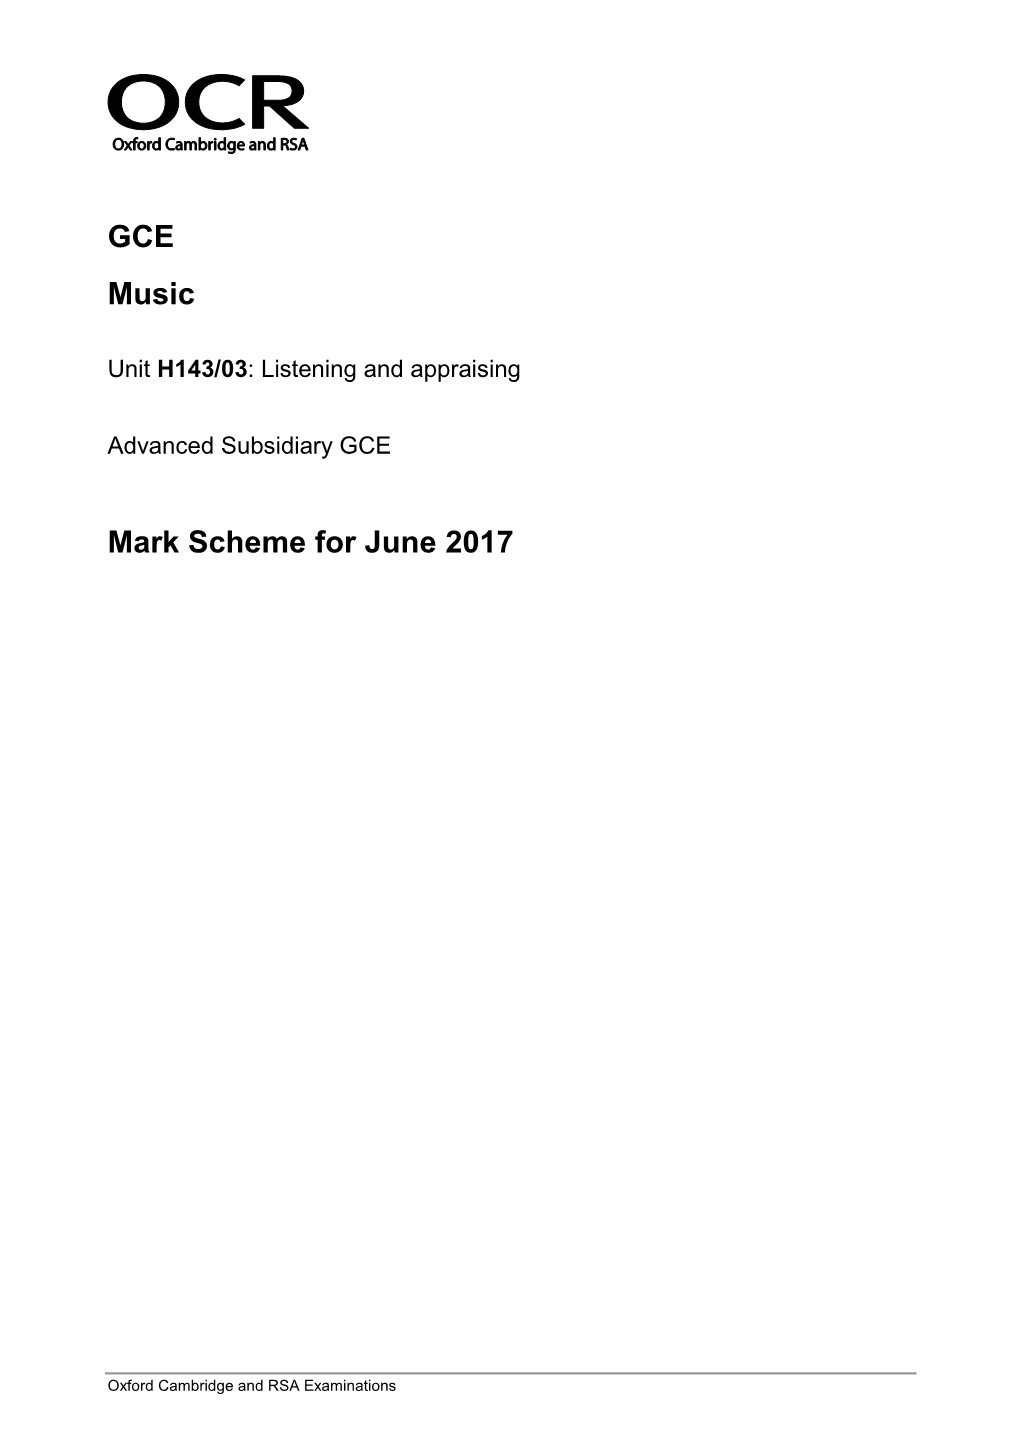 Mark Scheme H143/03 Listening and Appraising June 2017